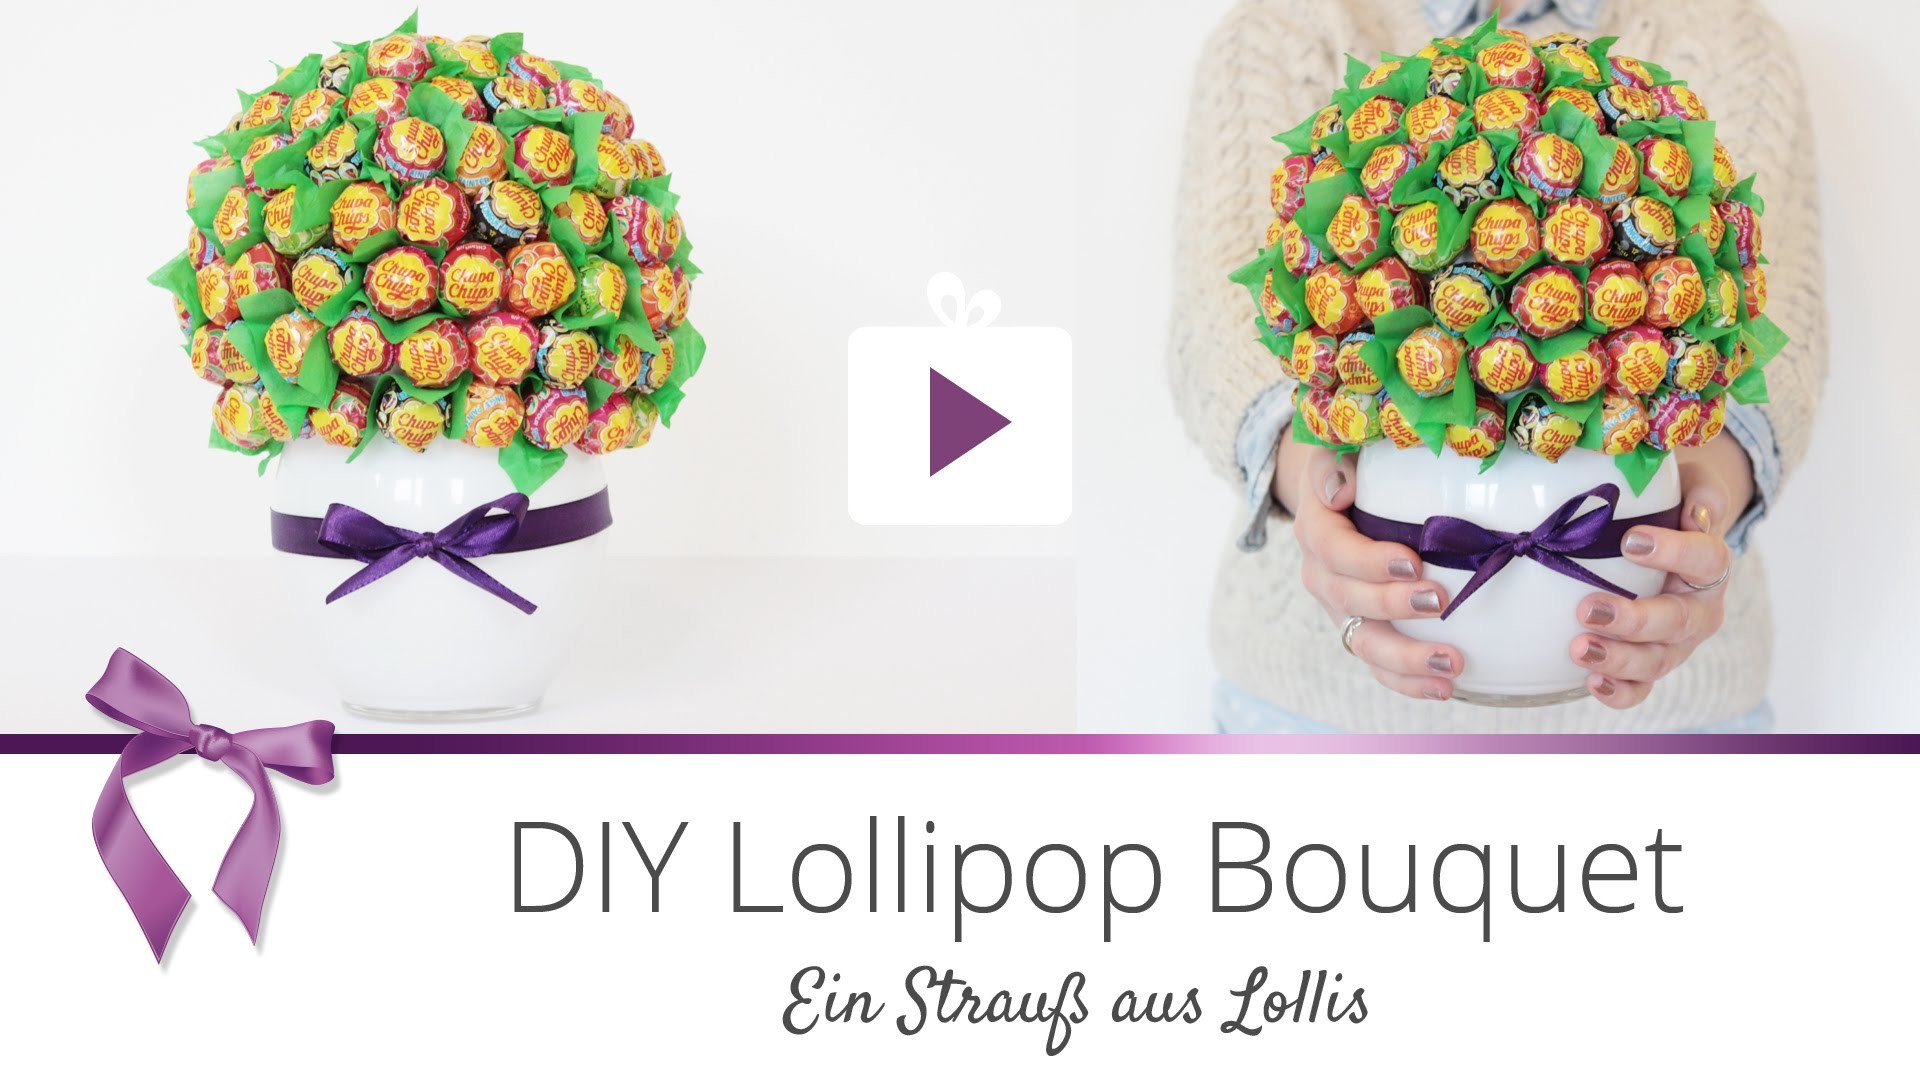 [DIY] Lollipop Bouquet | DANATO